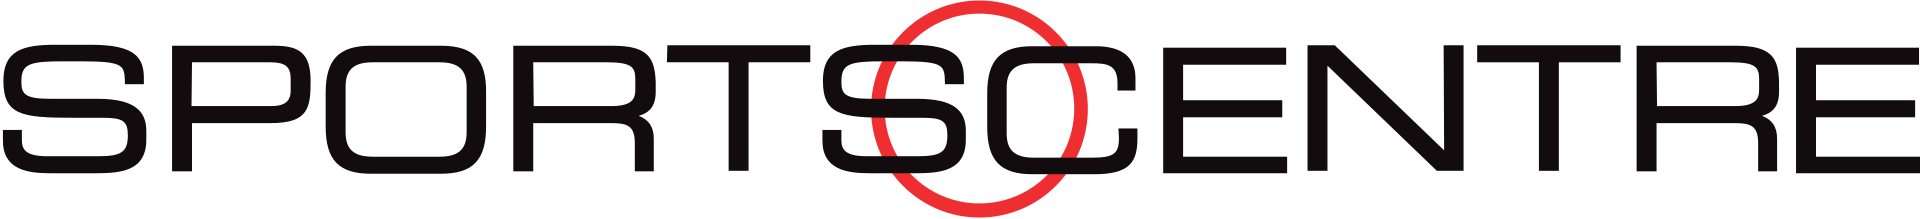 SportsCentre TSN logo.svg